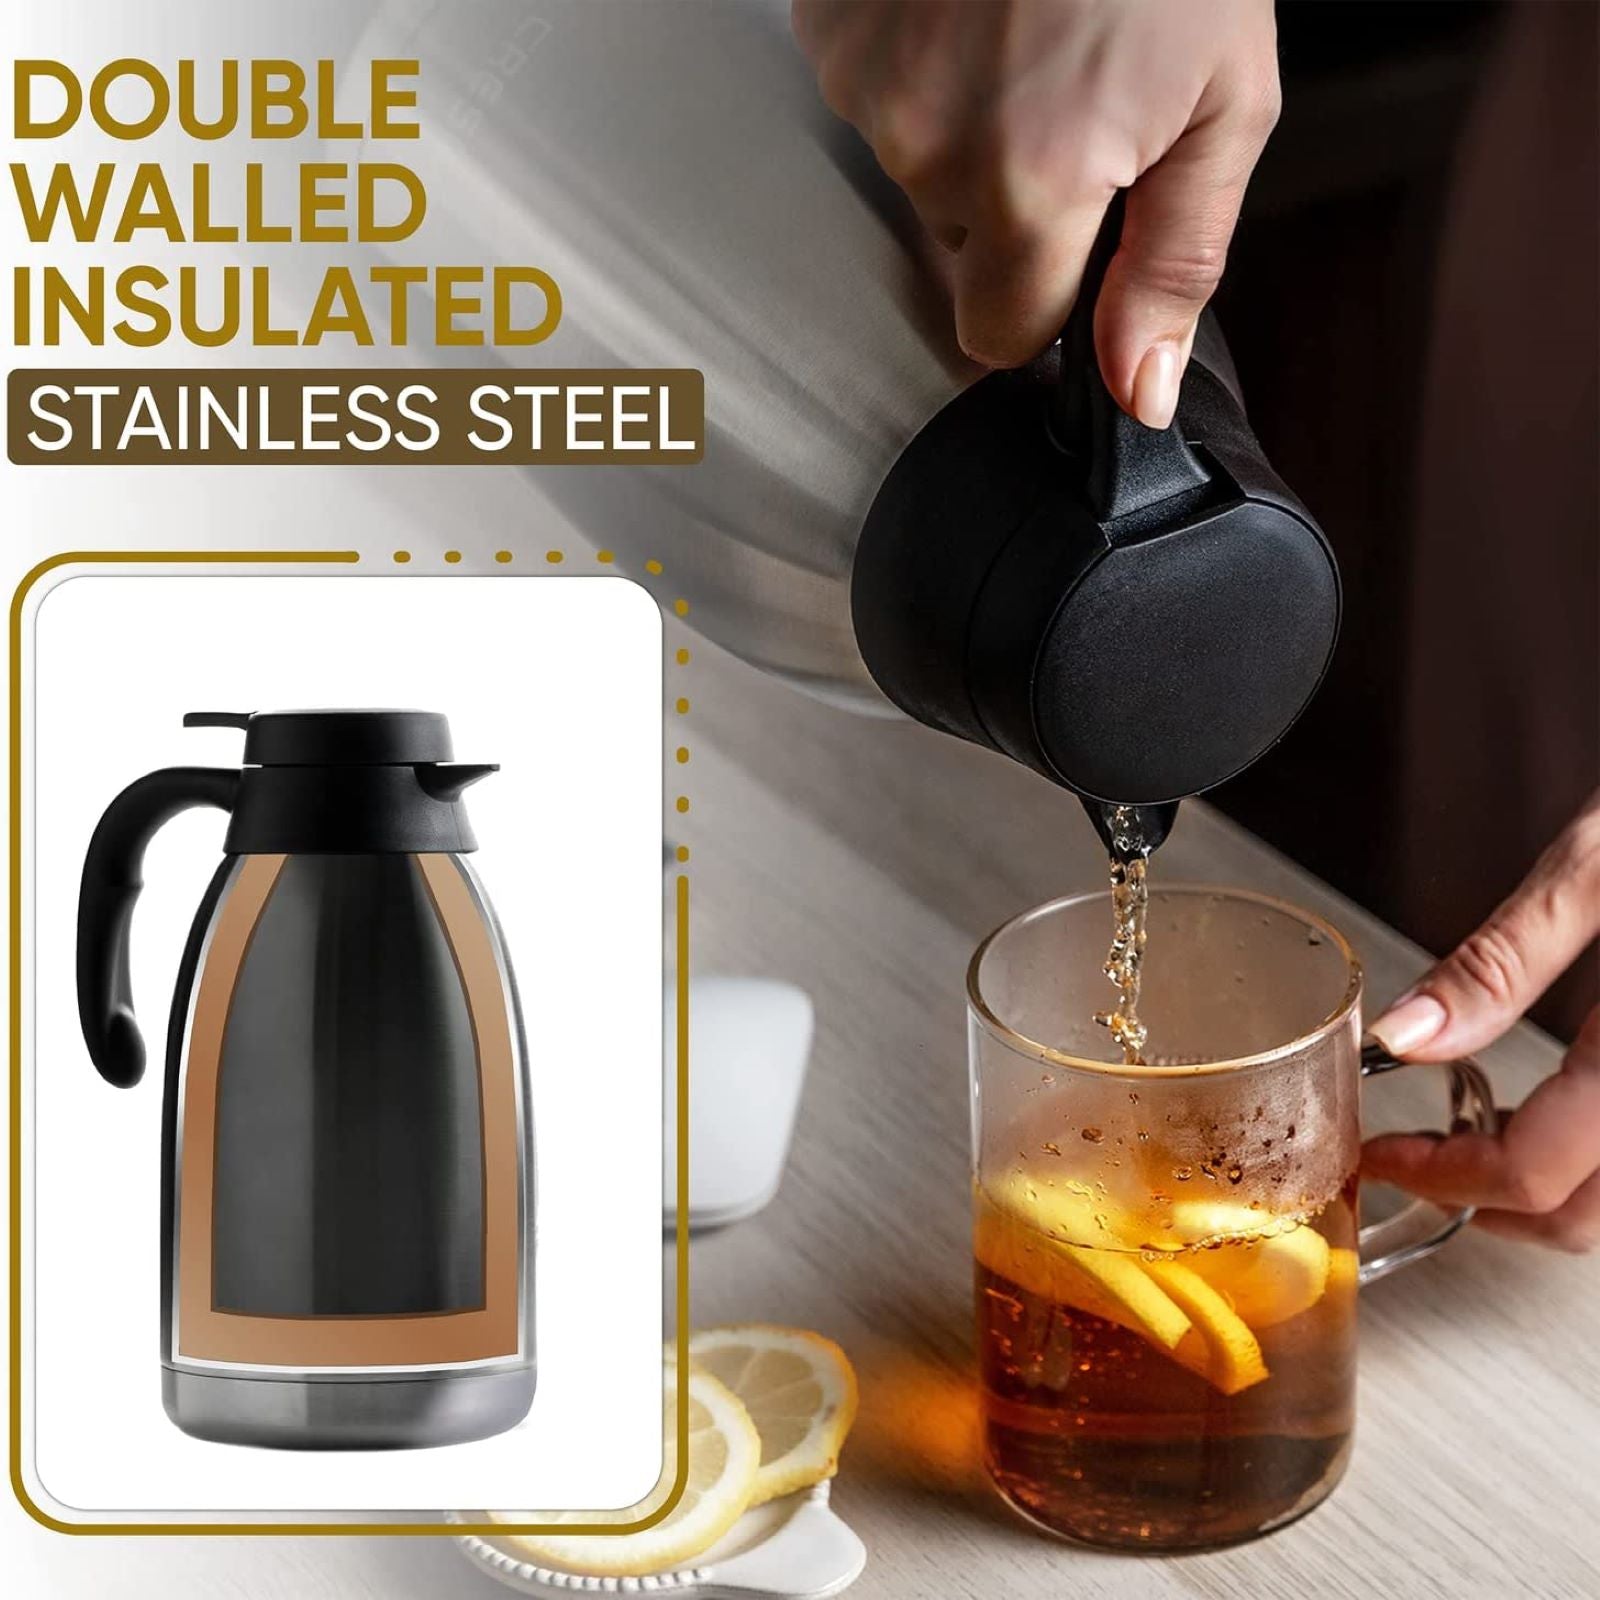 CRESIMO 101 Oz Thermal Coffee Dispenser - Insulated Coffee Airpot